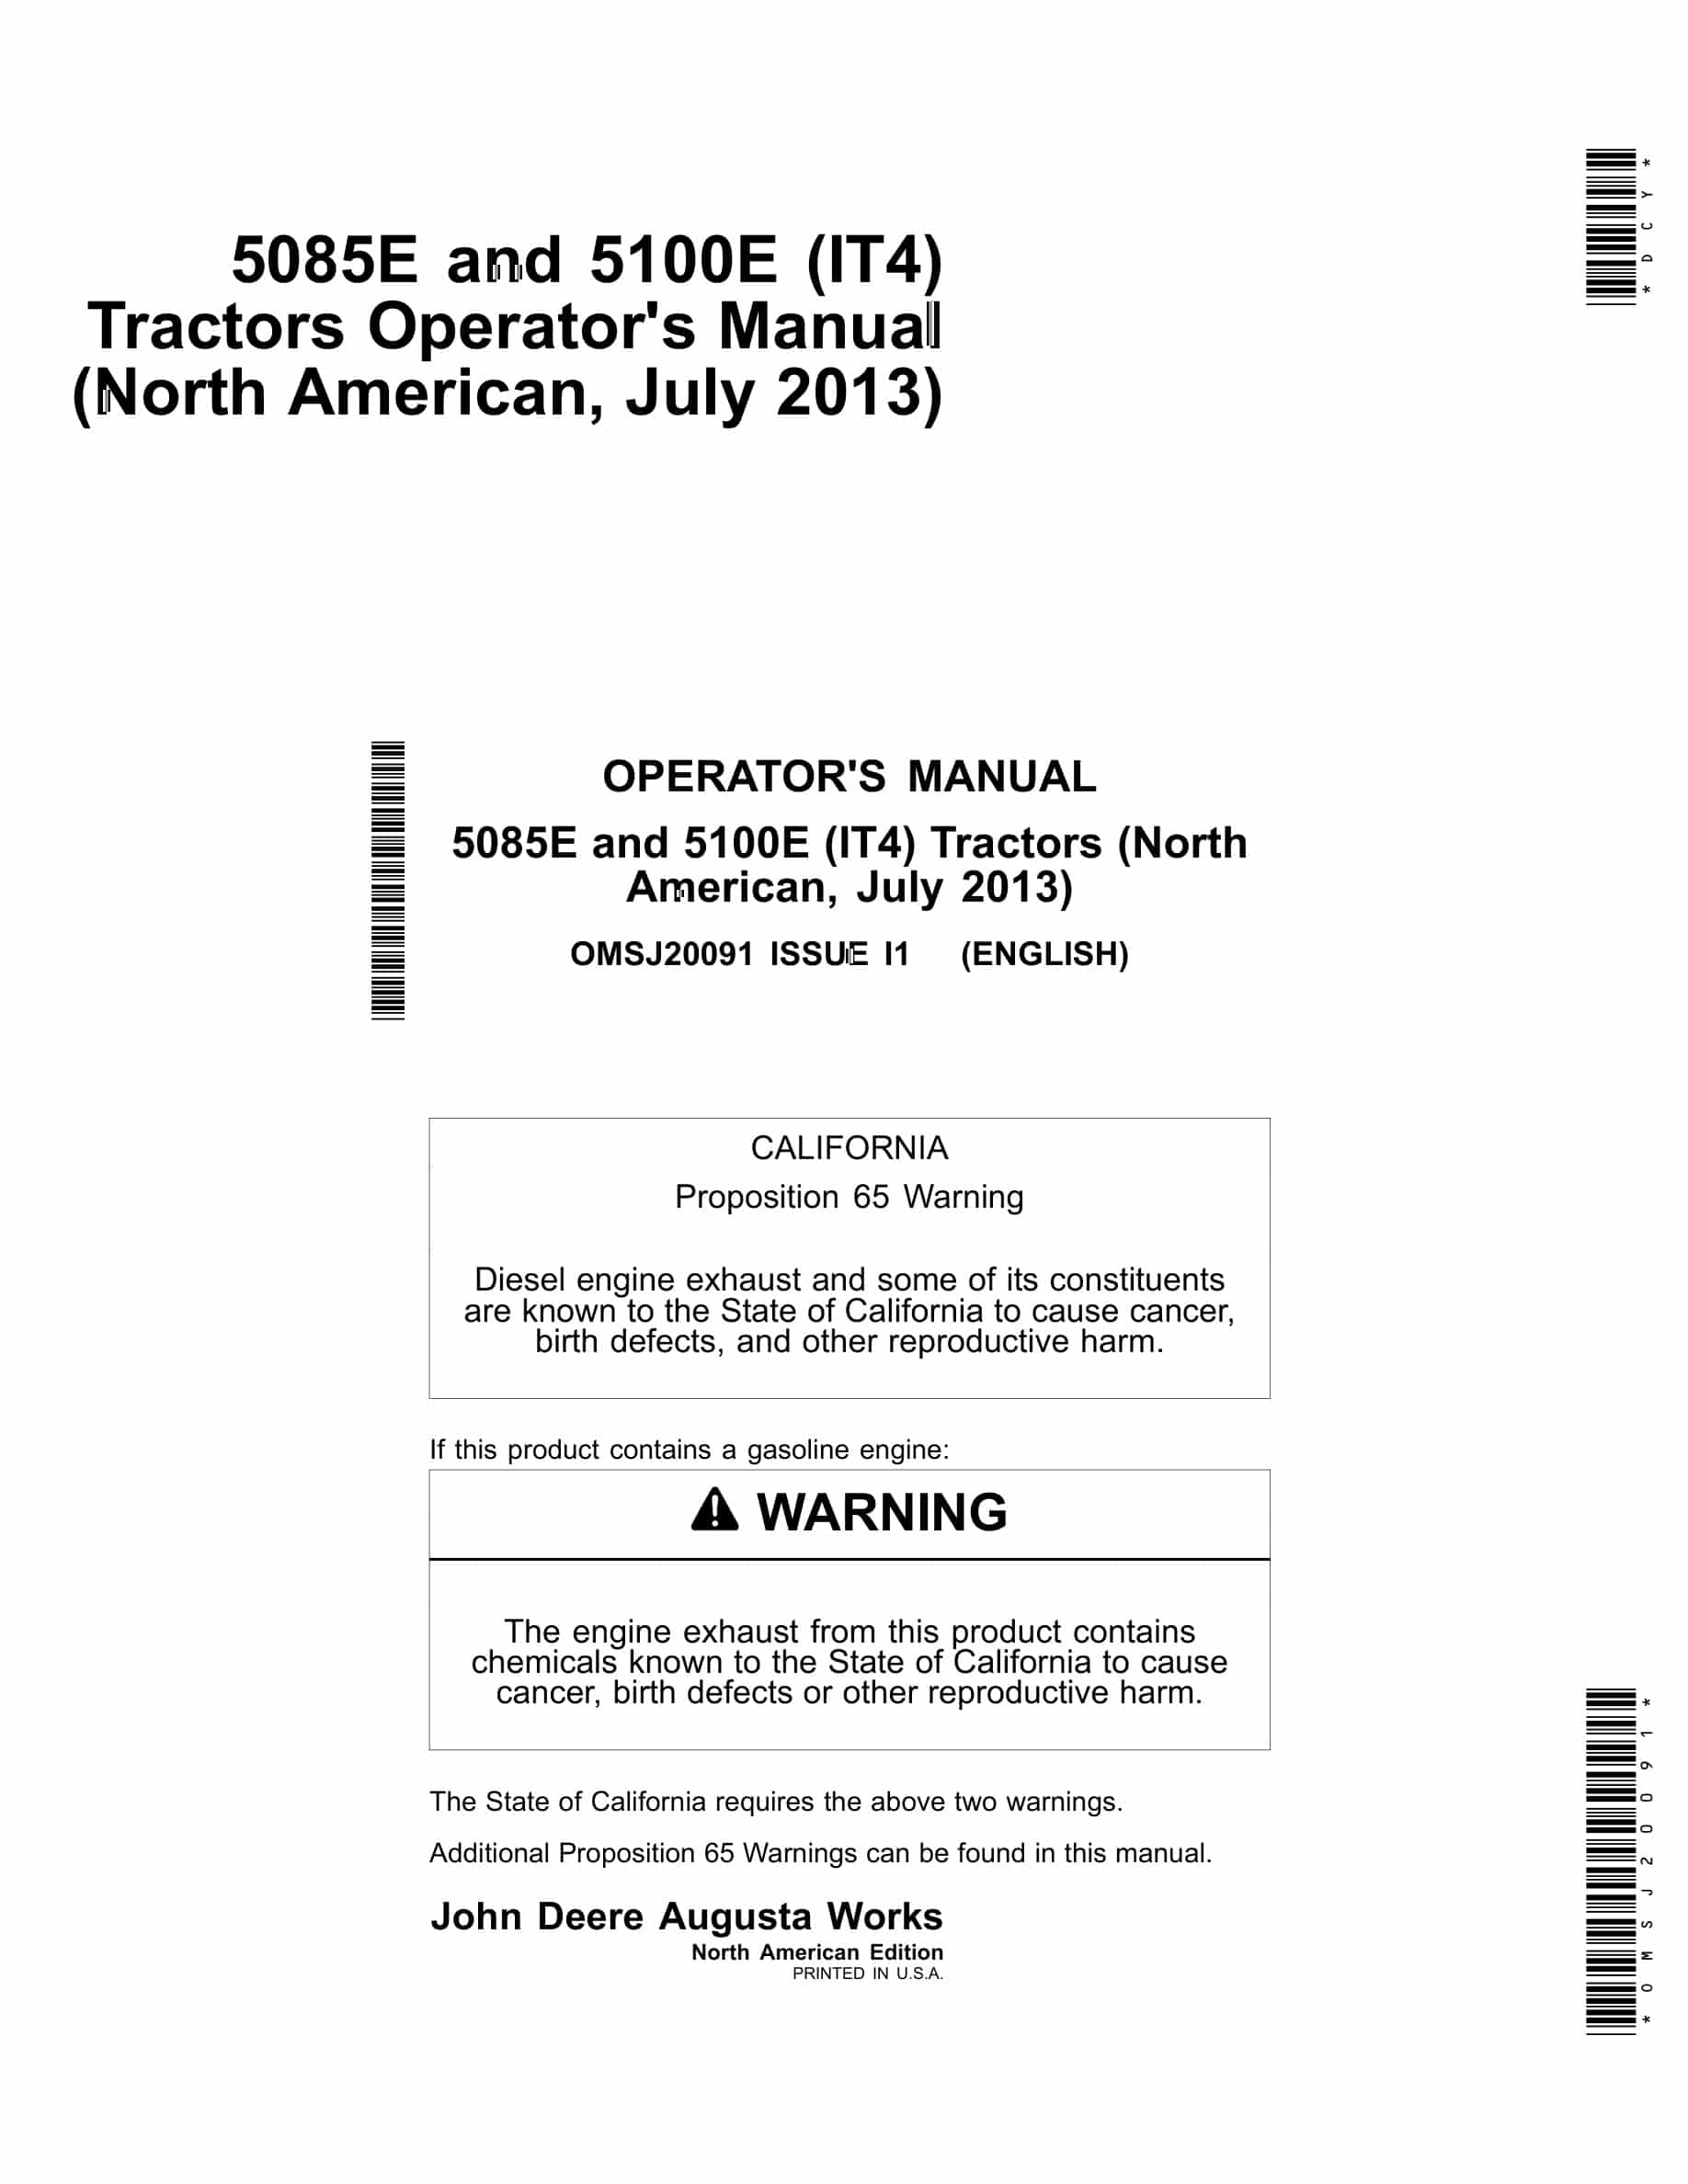 John Deere 5085E and 5100E (IT4 Tractor Operator Manual OMSJ20091-1